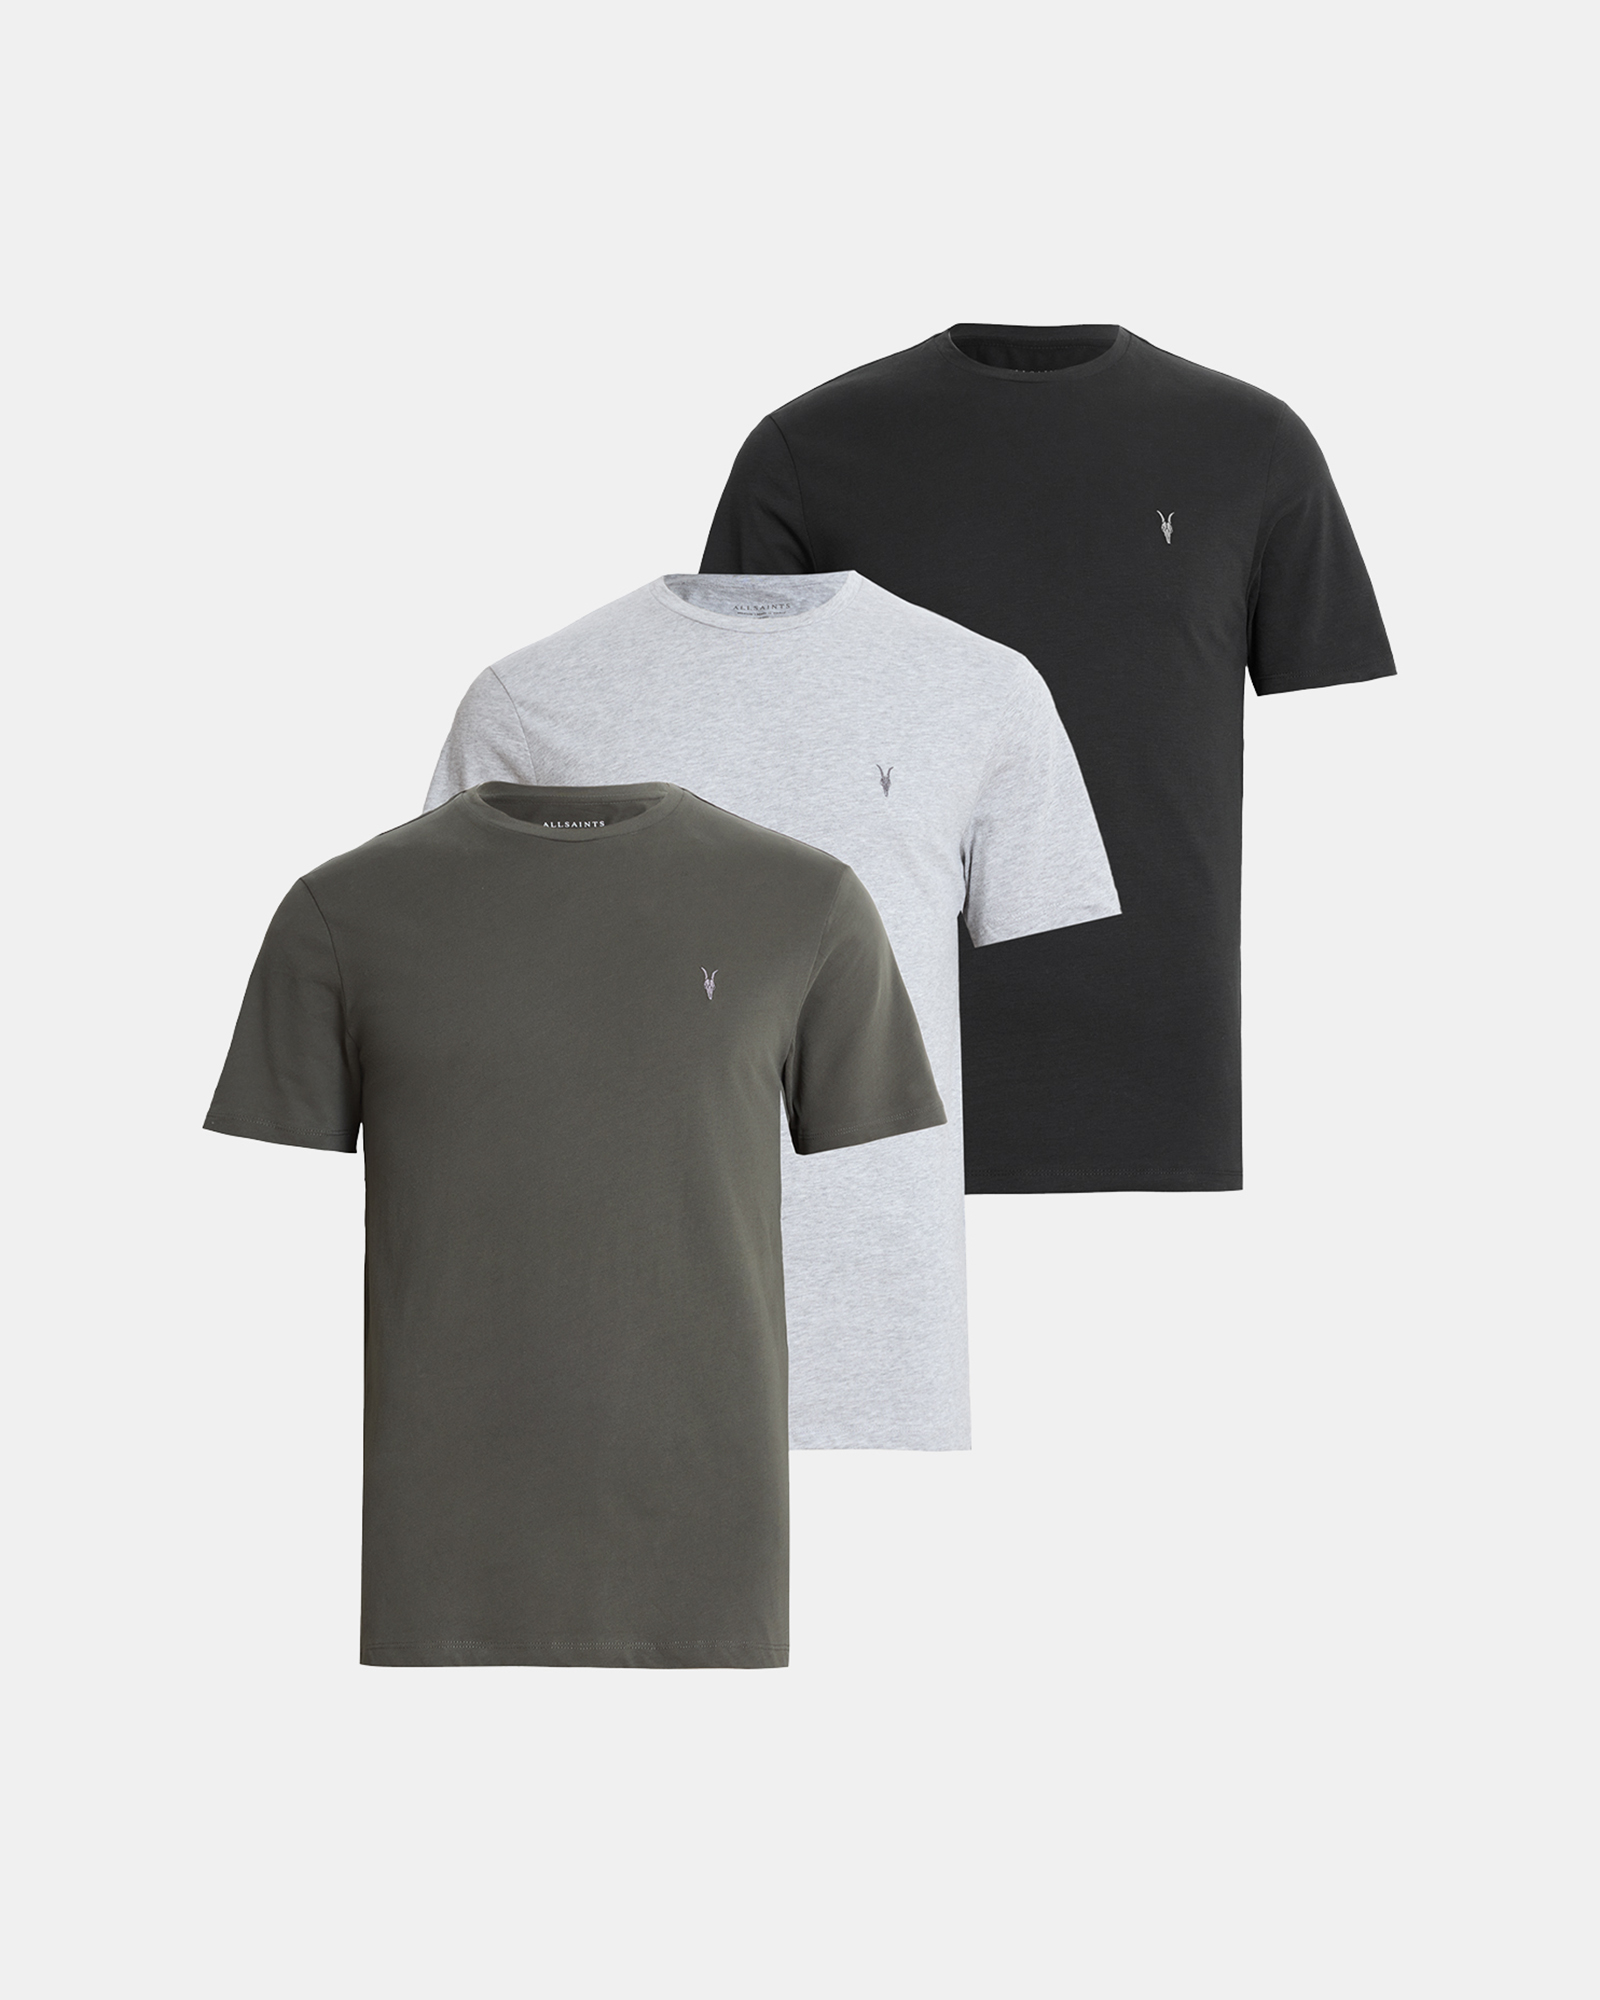 AllSaints Brace Brushed Cotton T-Shirts 3 Pack,, GRN/GRY MRL/JT BLK